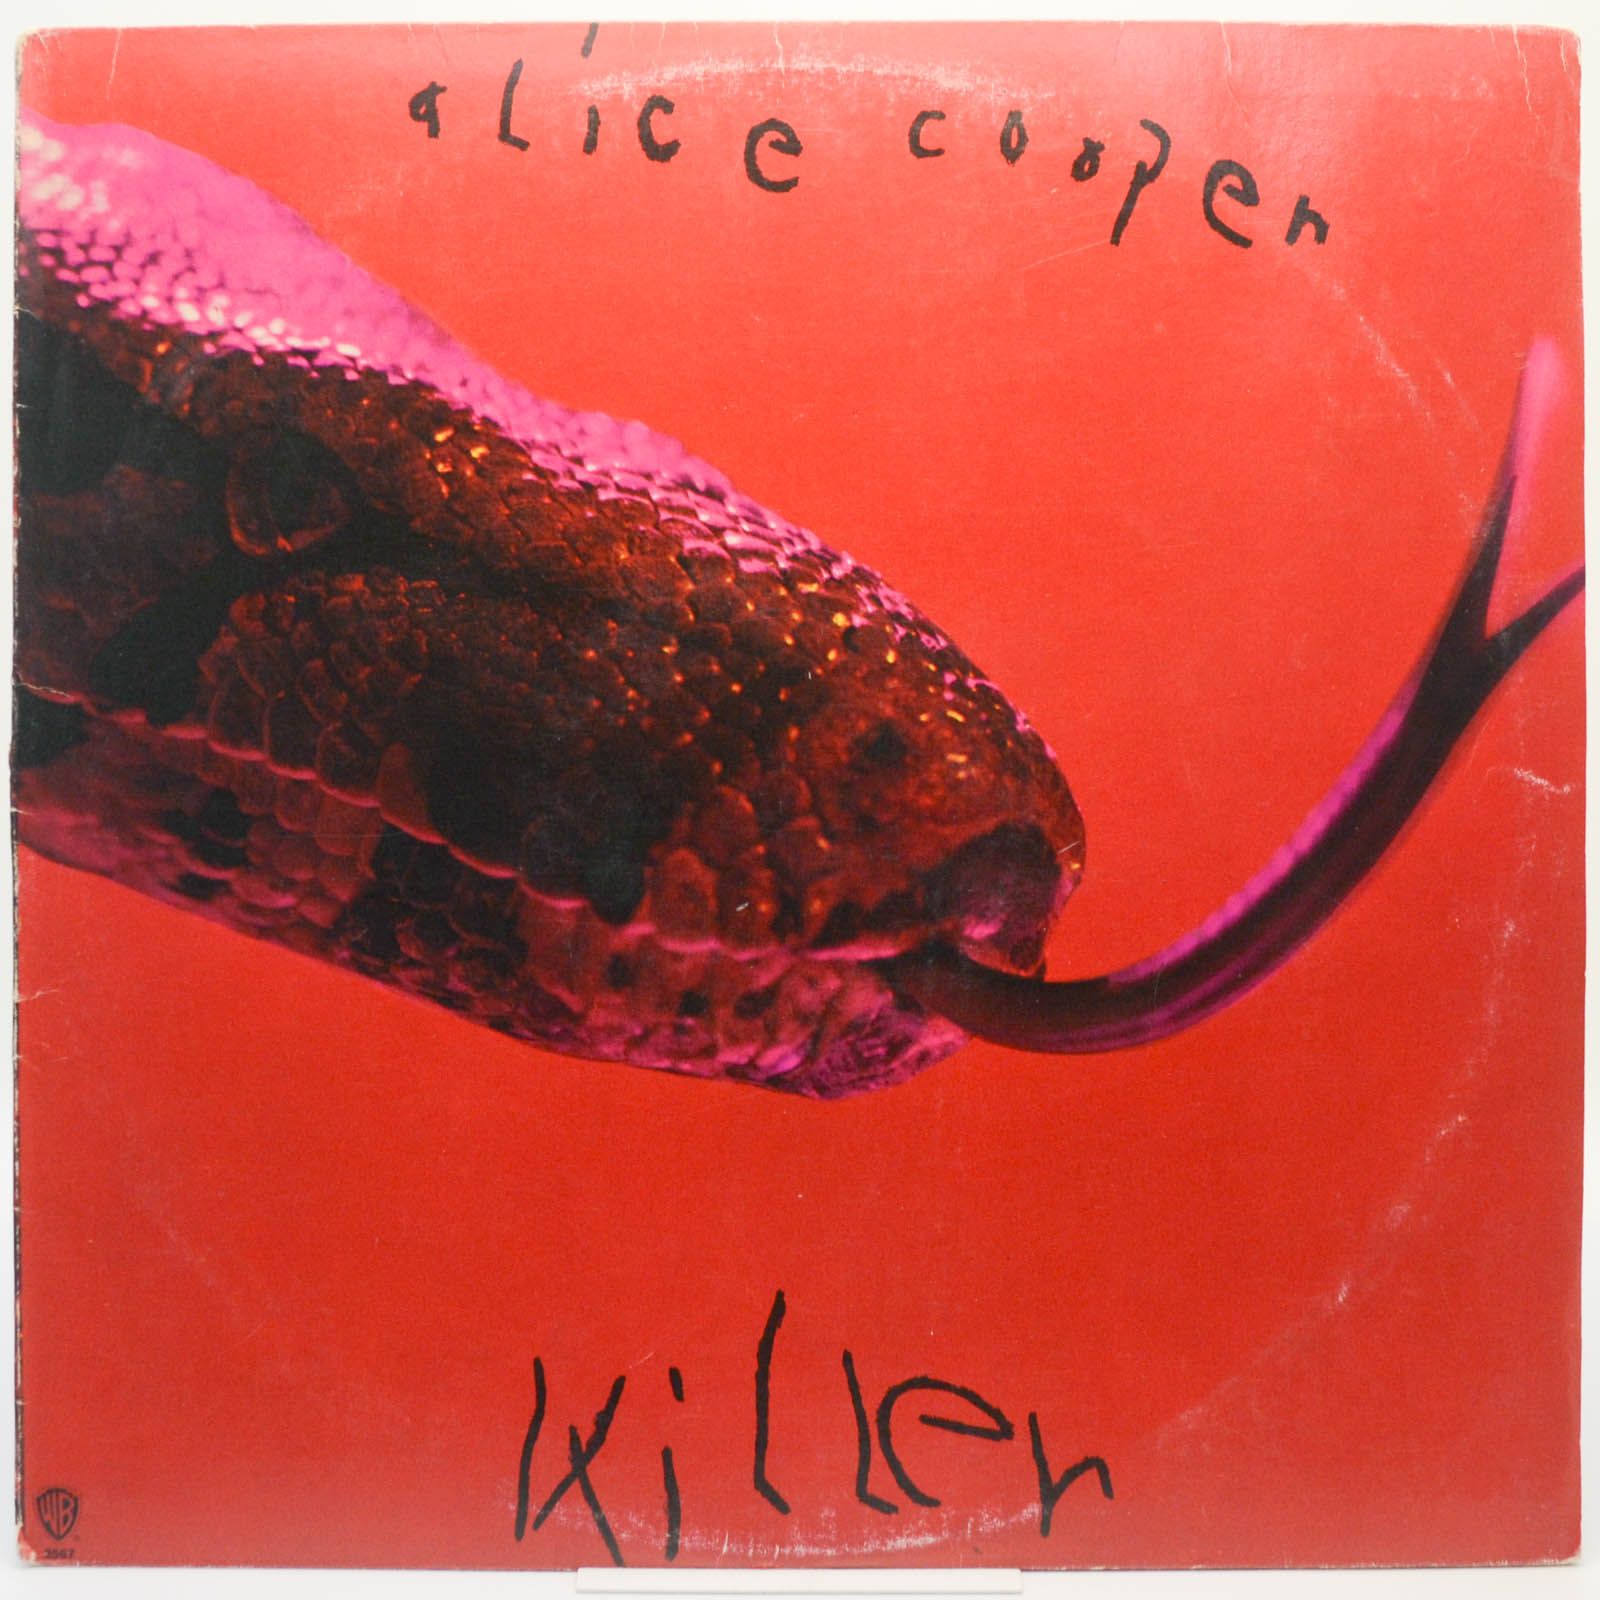 Alice Cooper — Killer (USA), 1971